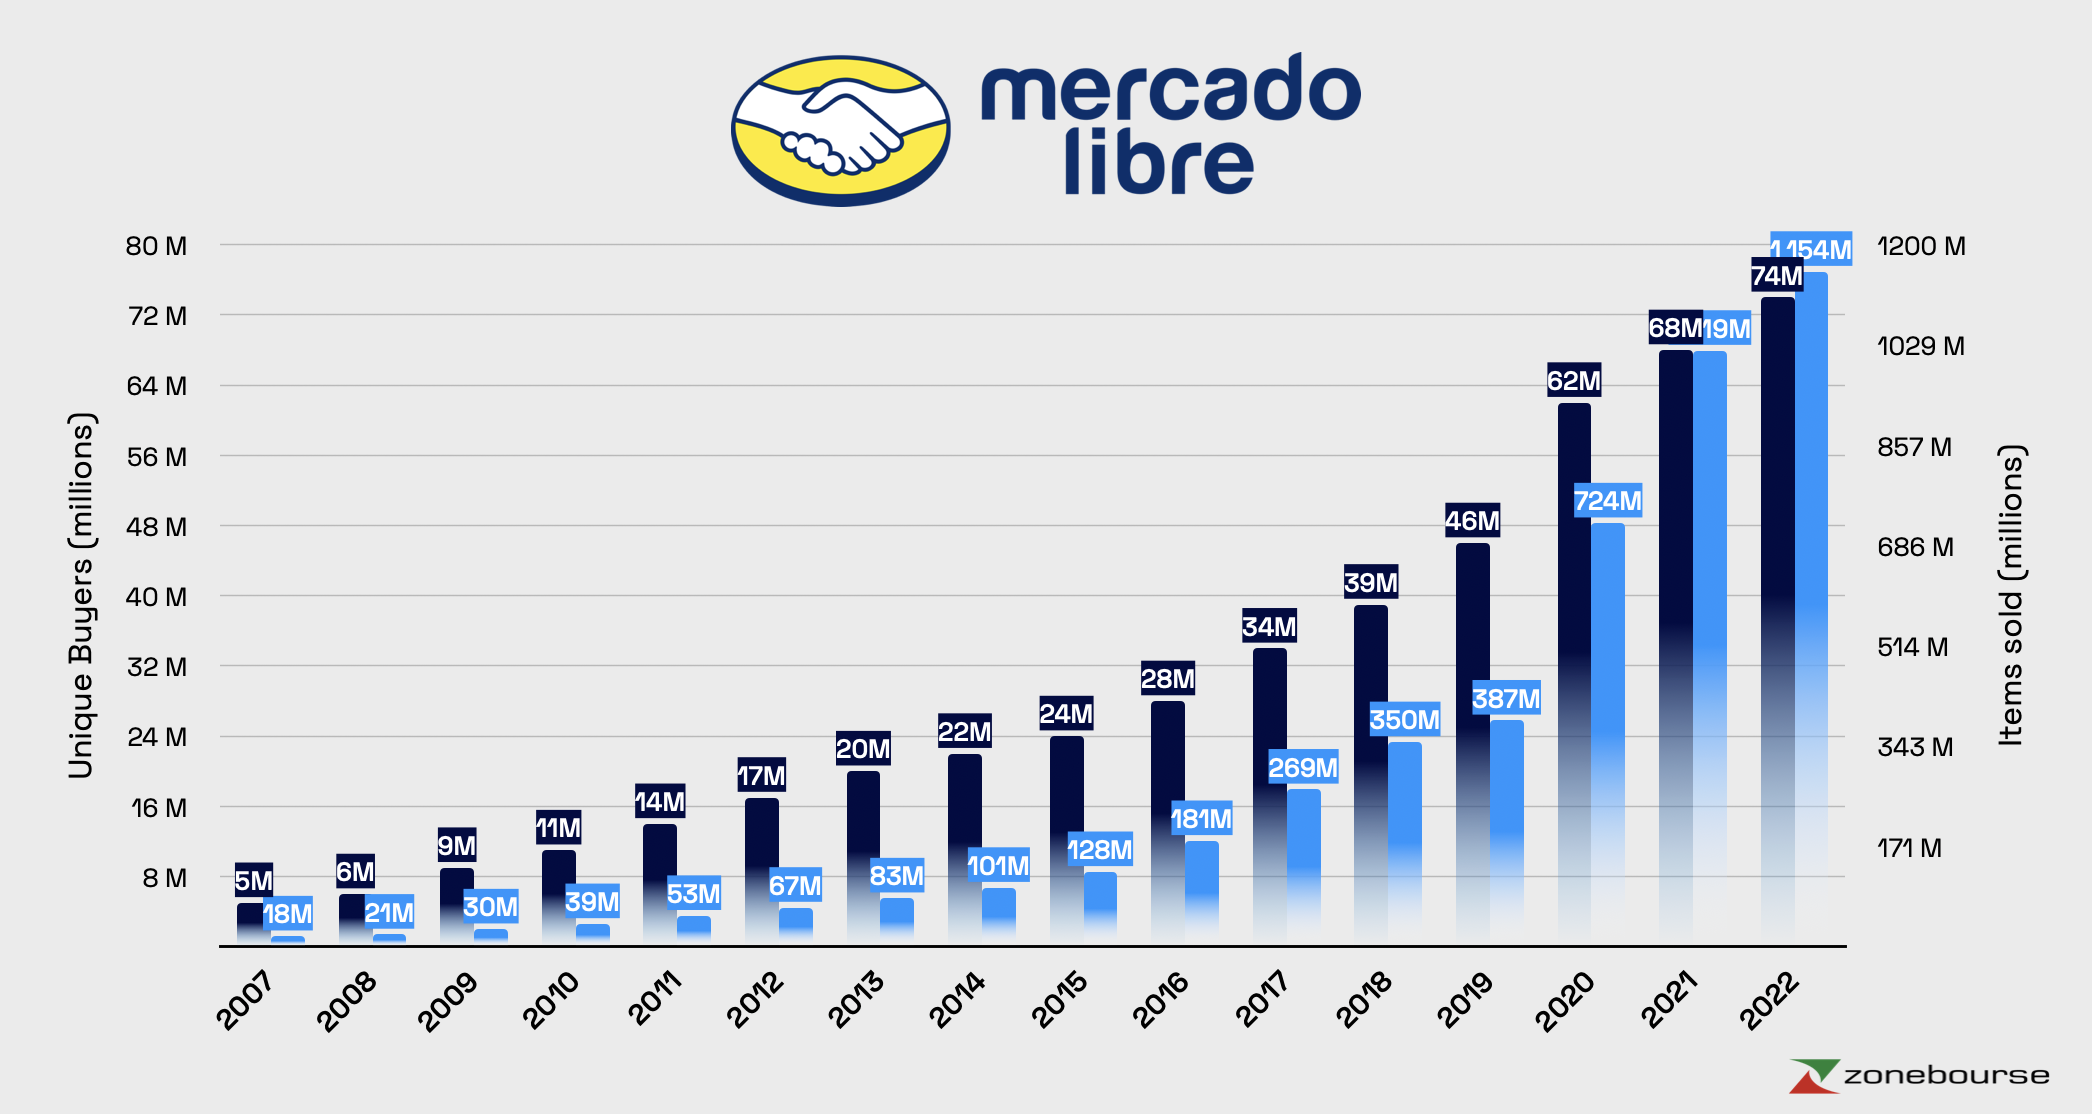 MercadoLibre, Inc. : Latin America's e-commerce leader -October 10